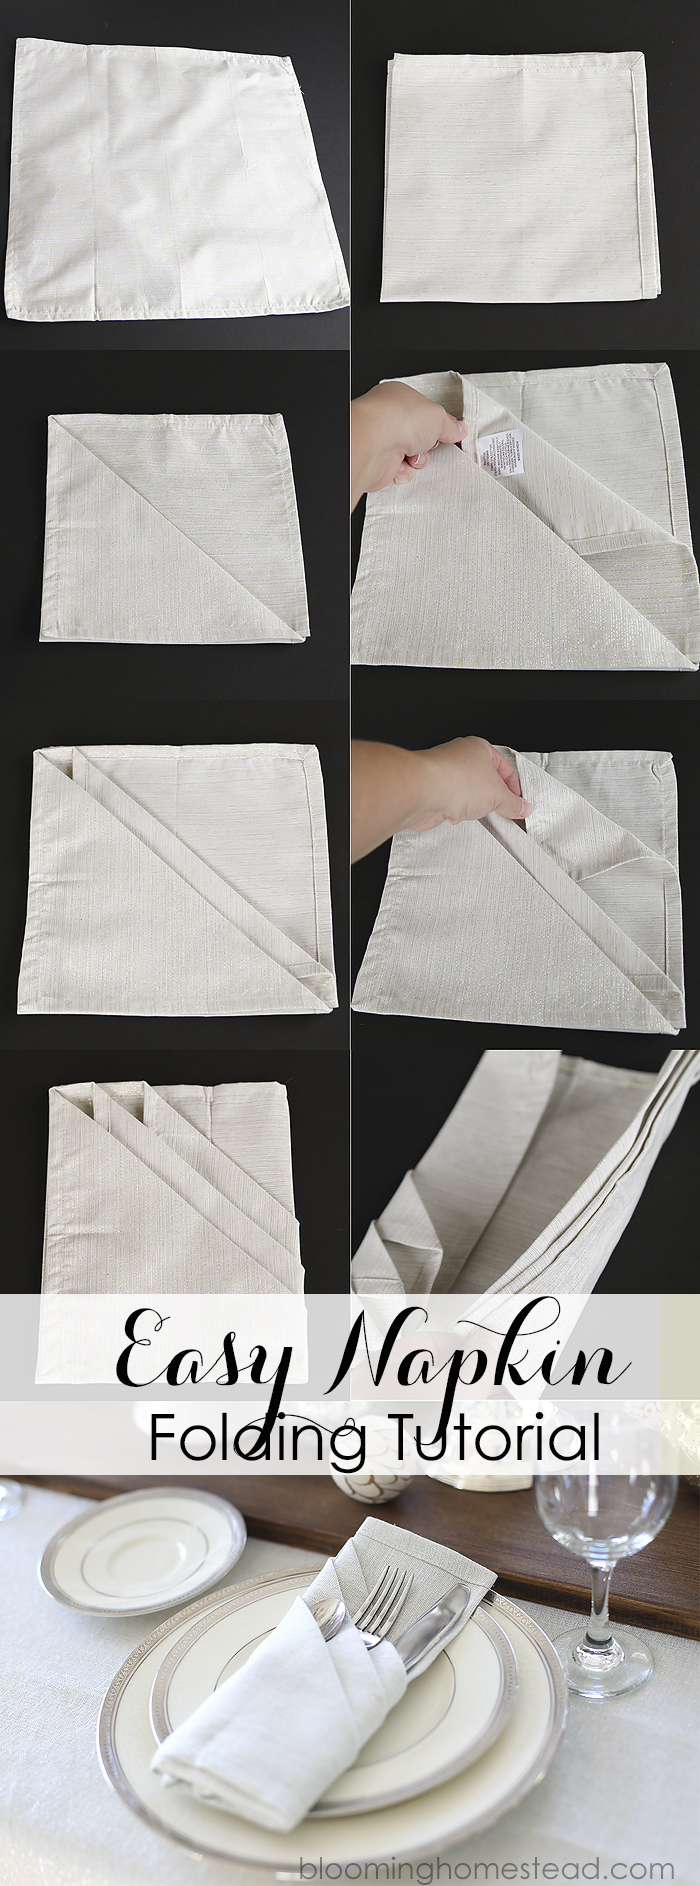 husmor Tap gambling How to Fold Cloth Napkins - Blooming Homestead